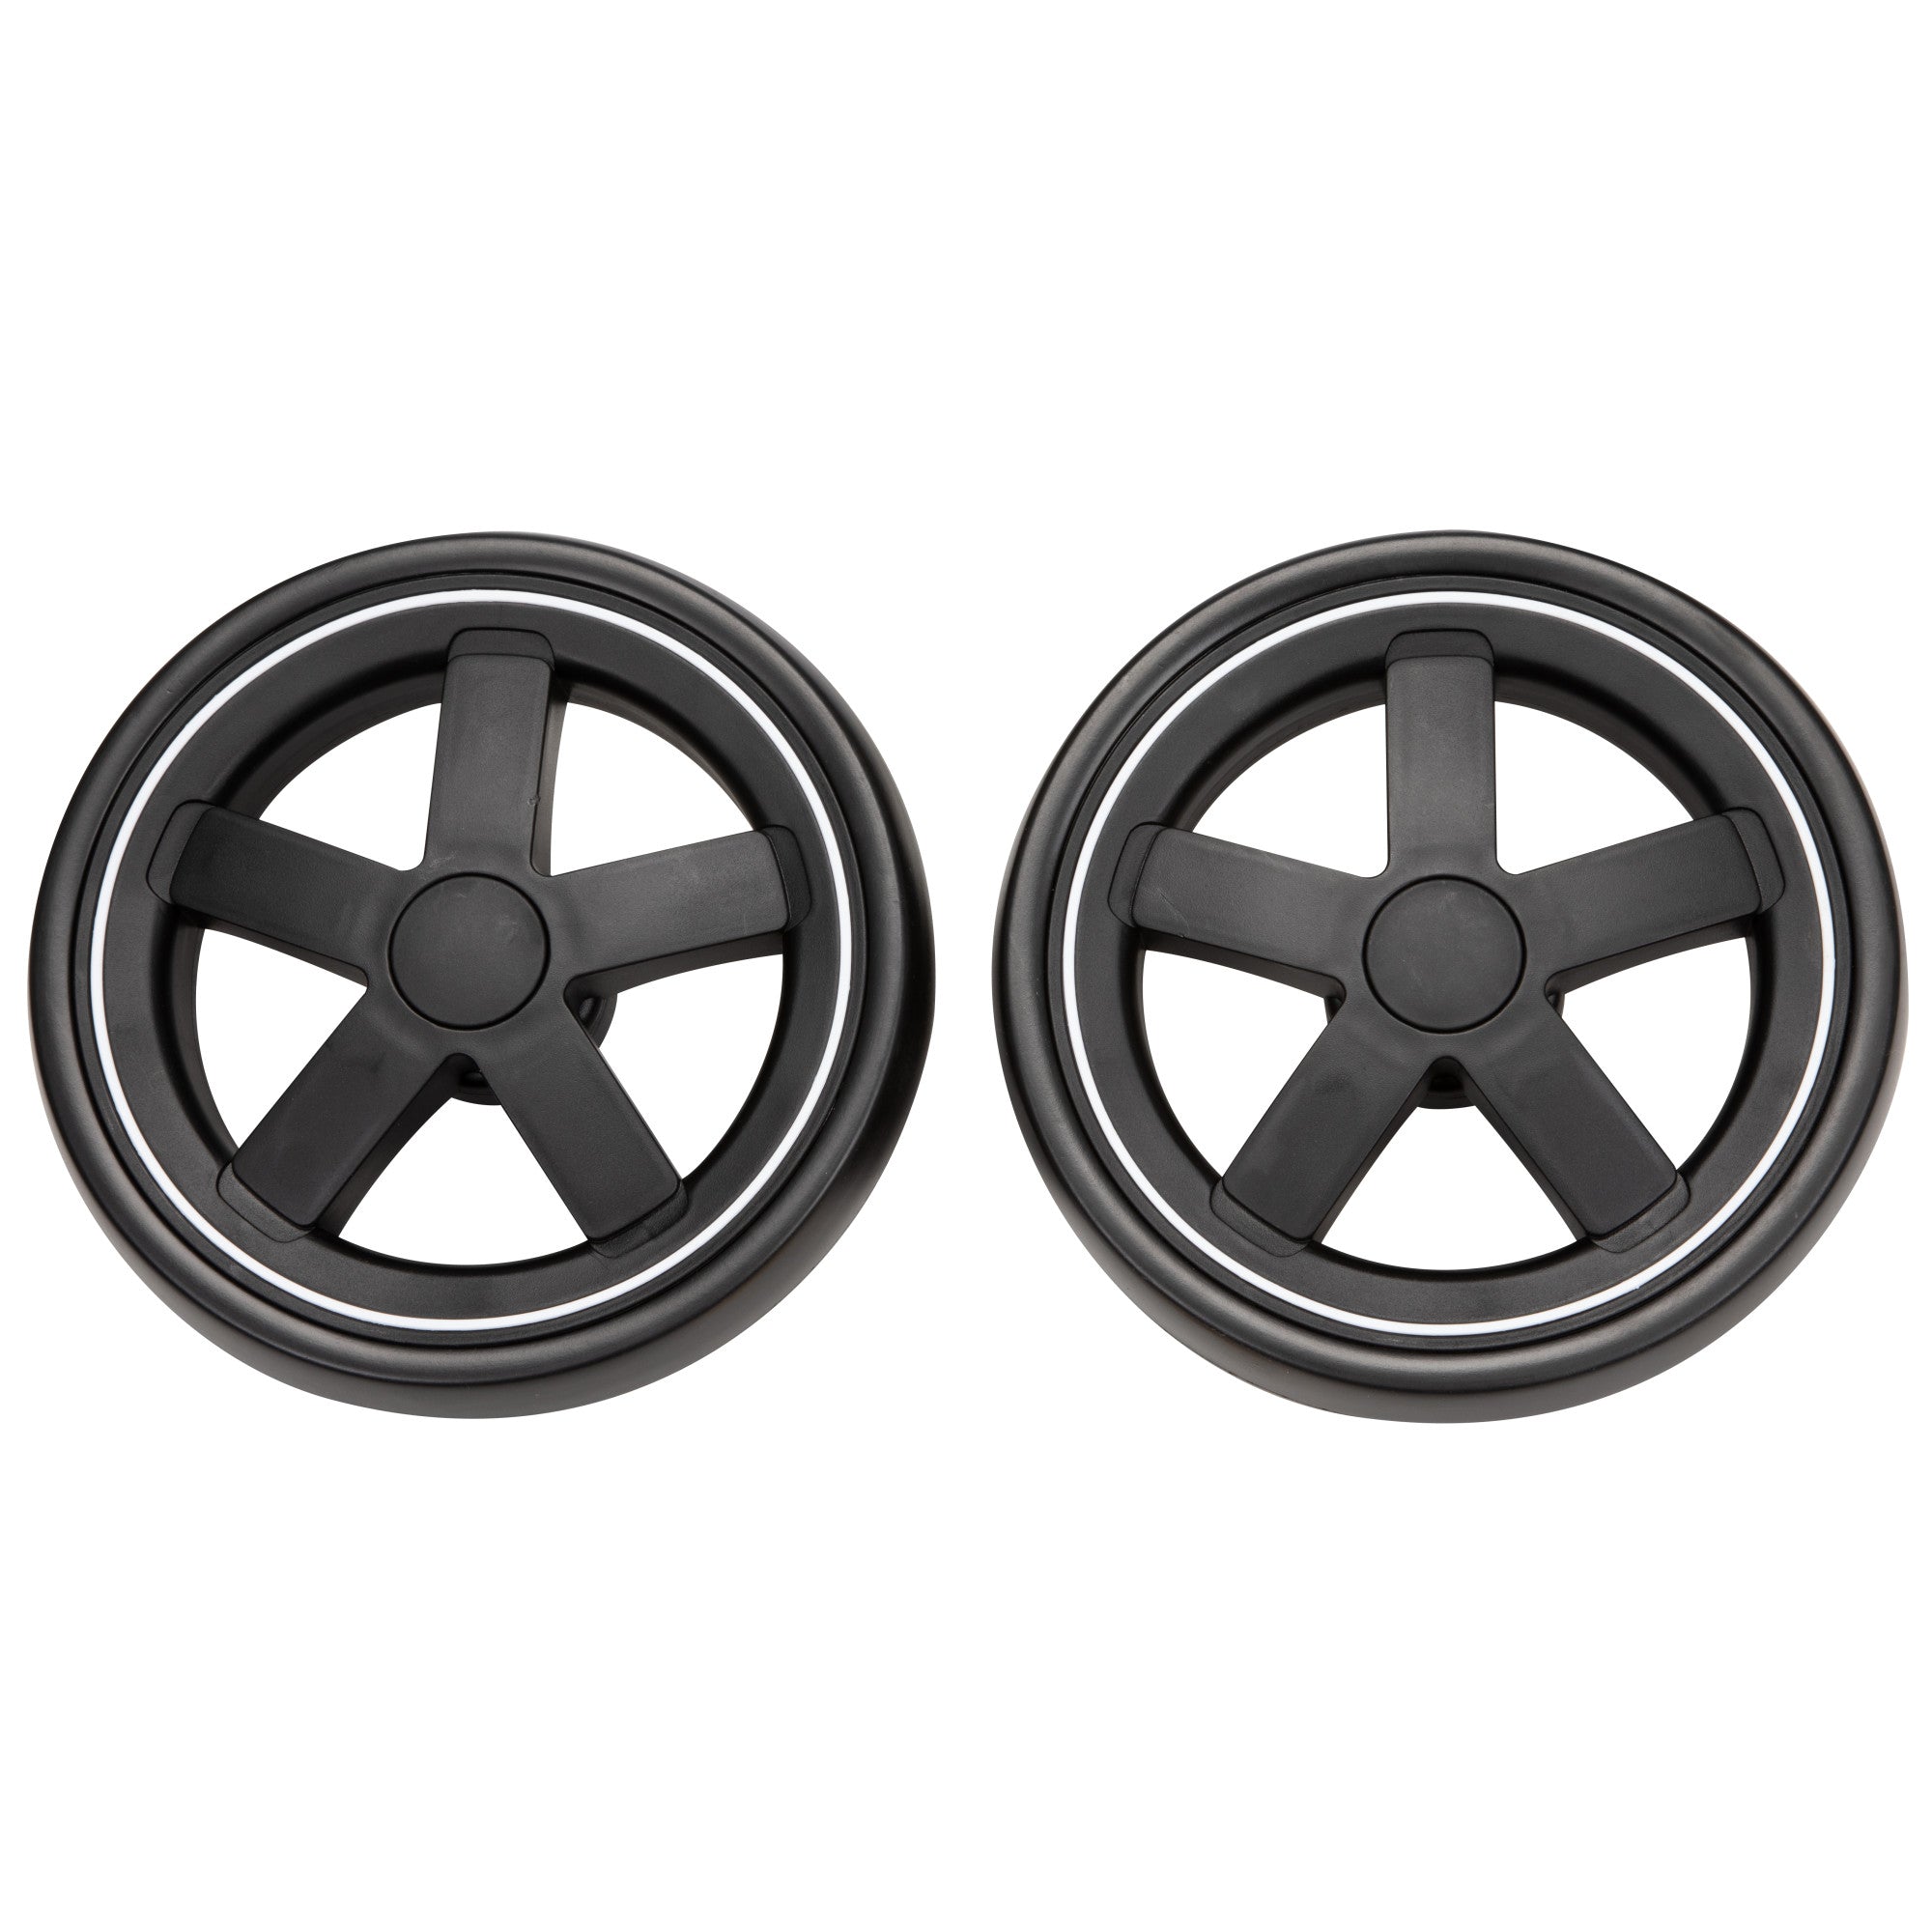 Maxi-Cosi Zelia Rear Wheel Kit in Black